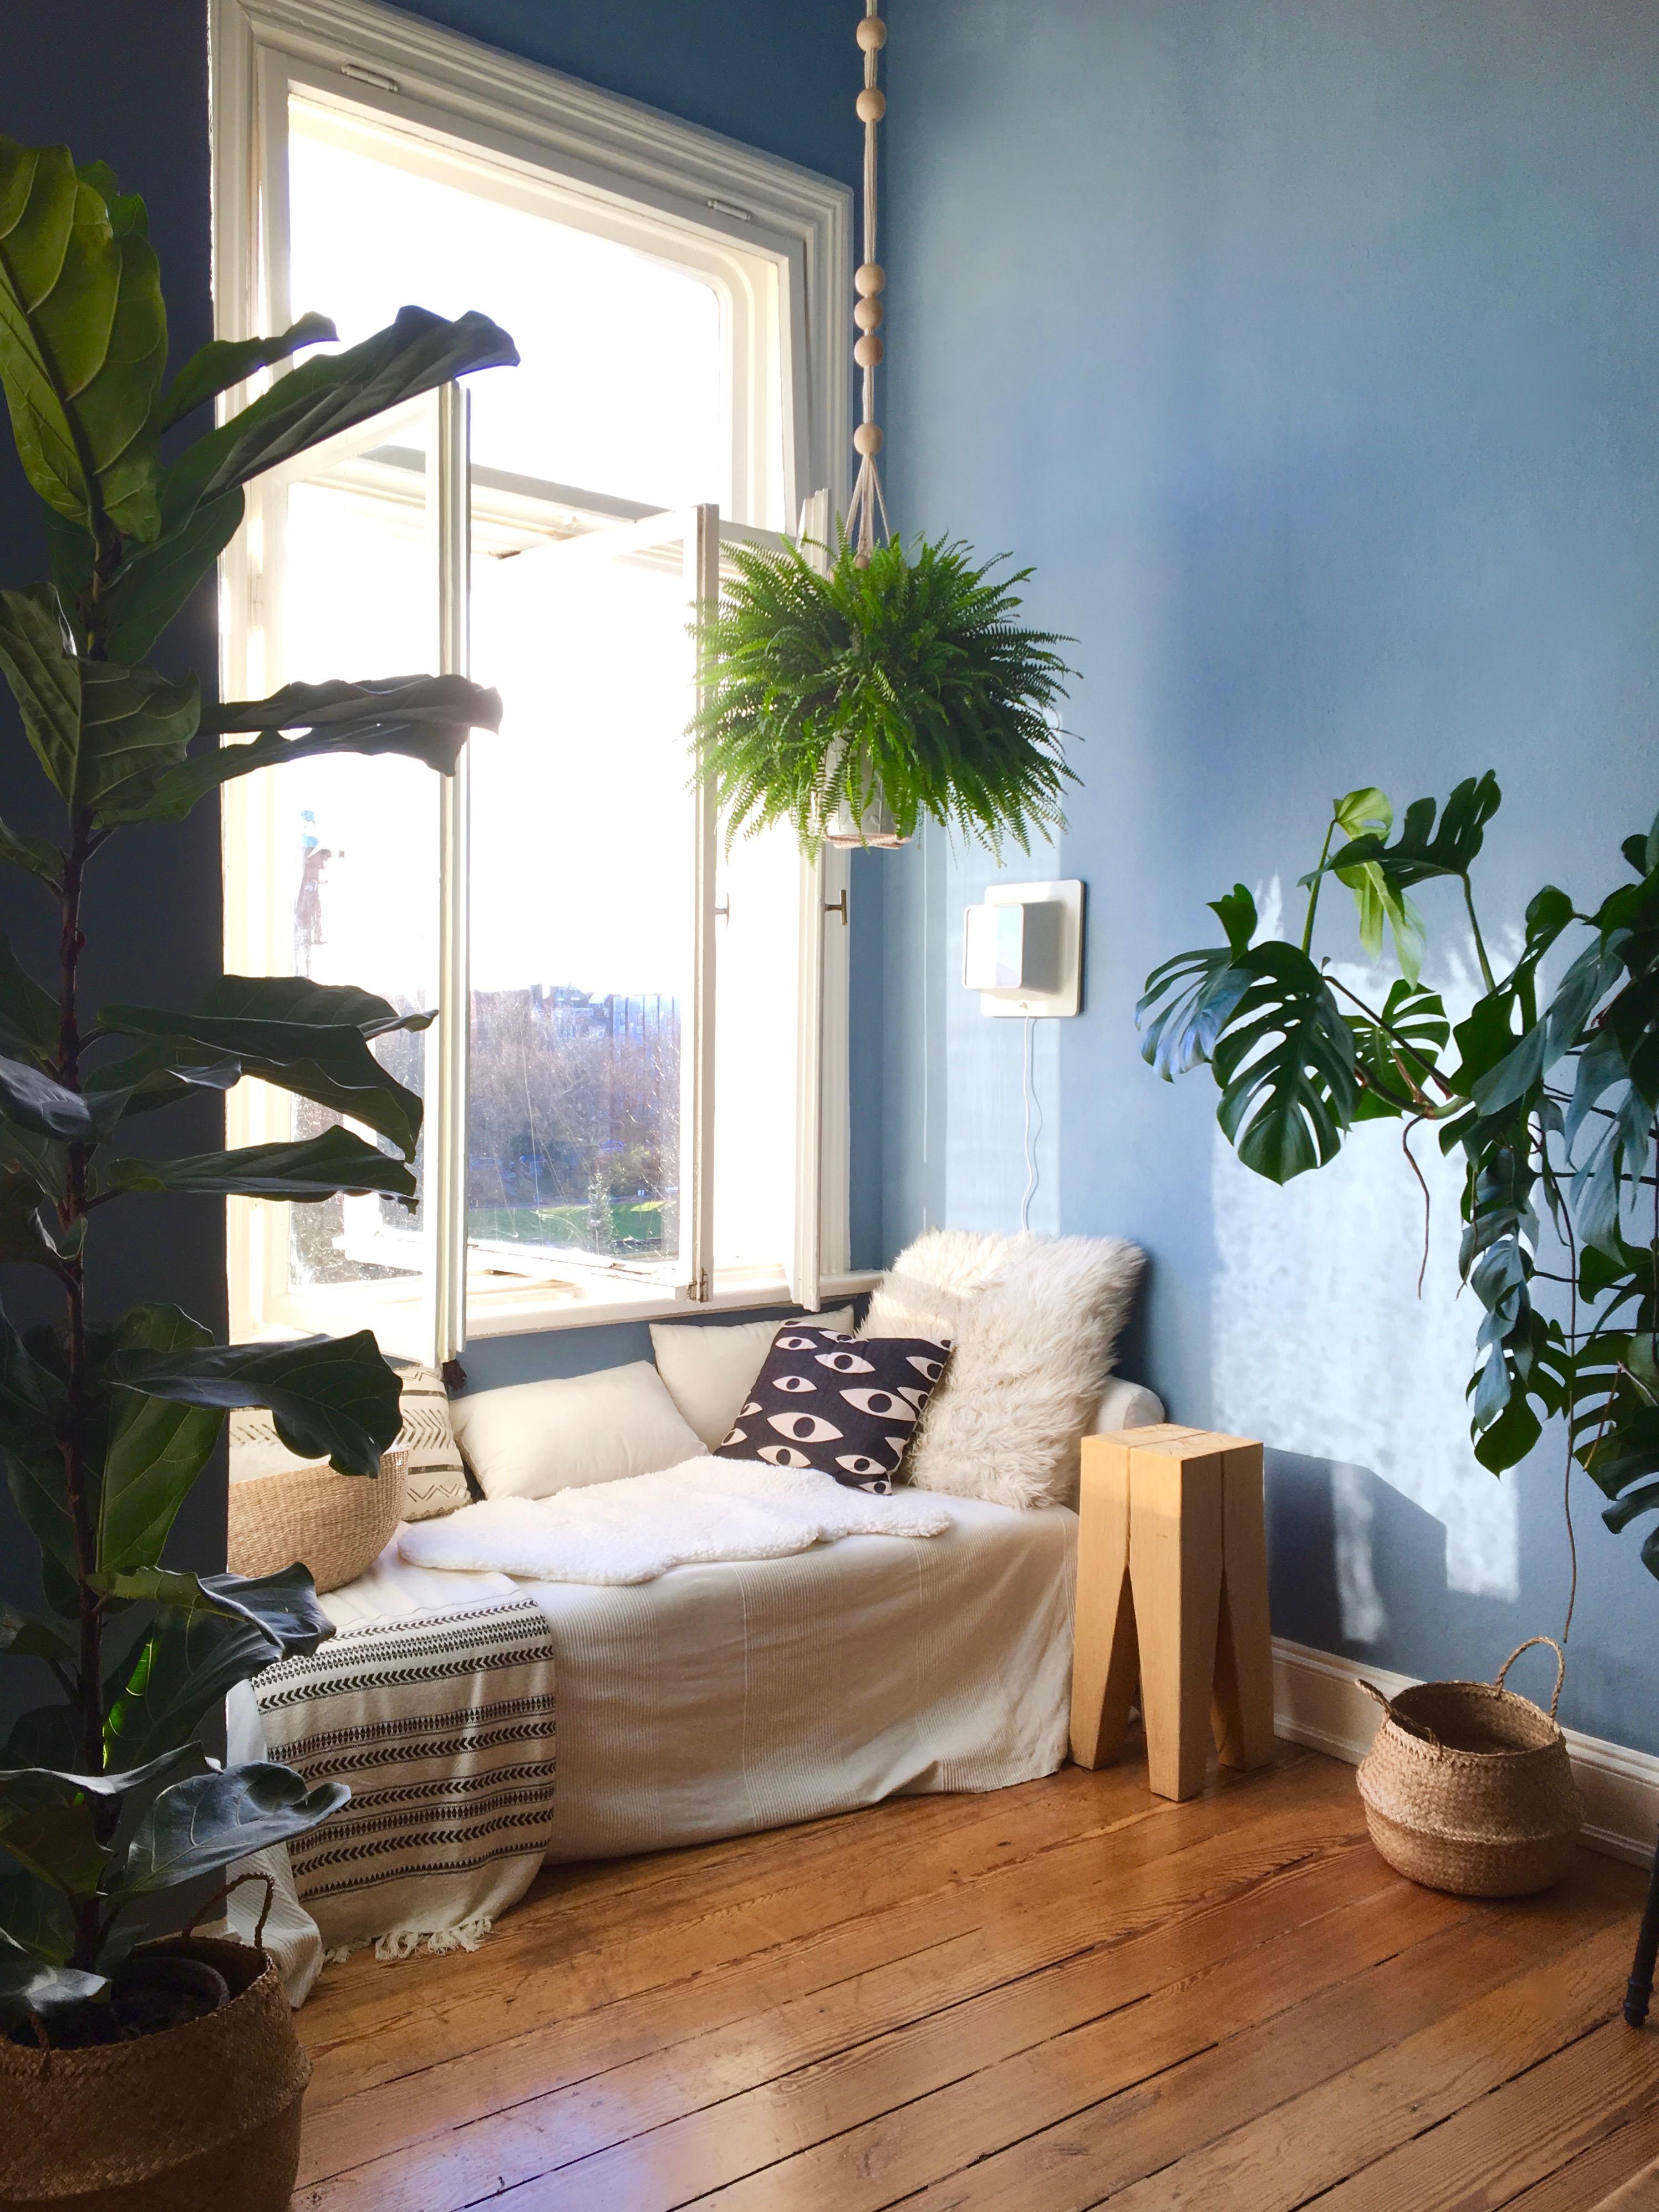 Sun meets blue wall 🌞 💙

#alpinafarben #ruhedesnordens #altbau #zimmerpflanzen #holzdielen